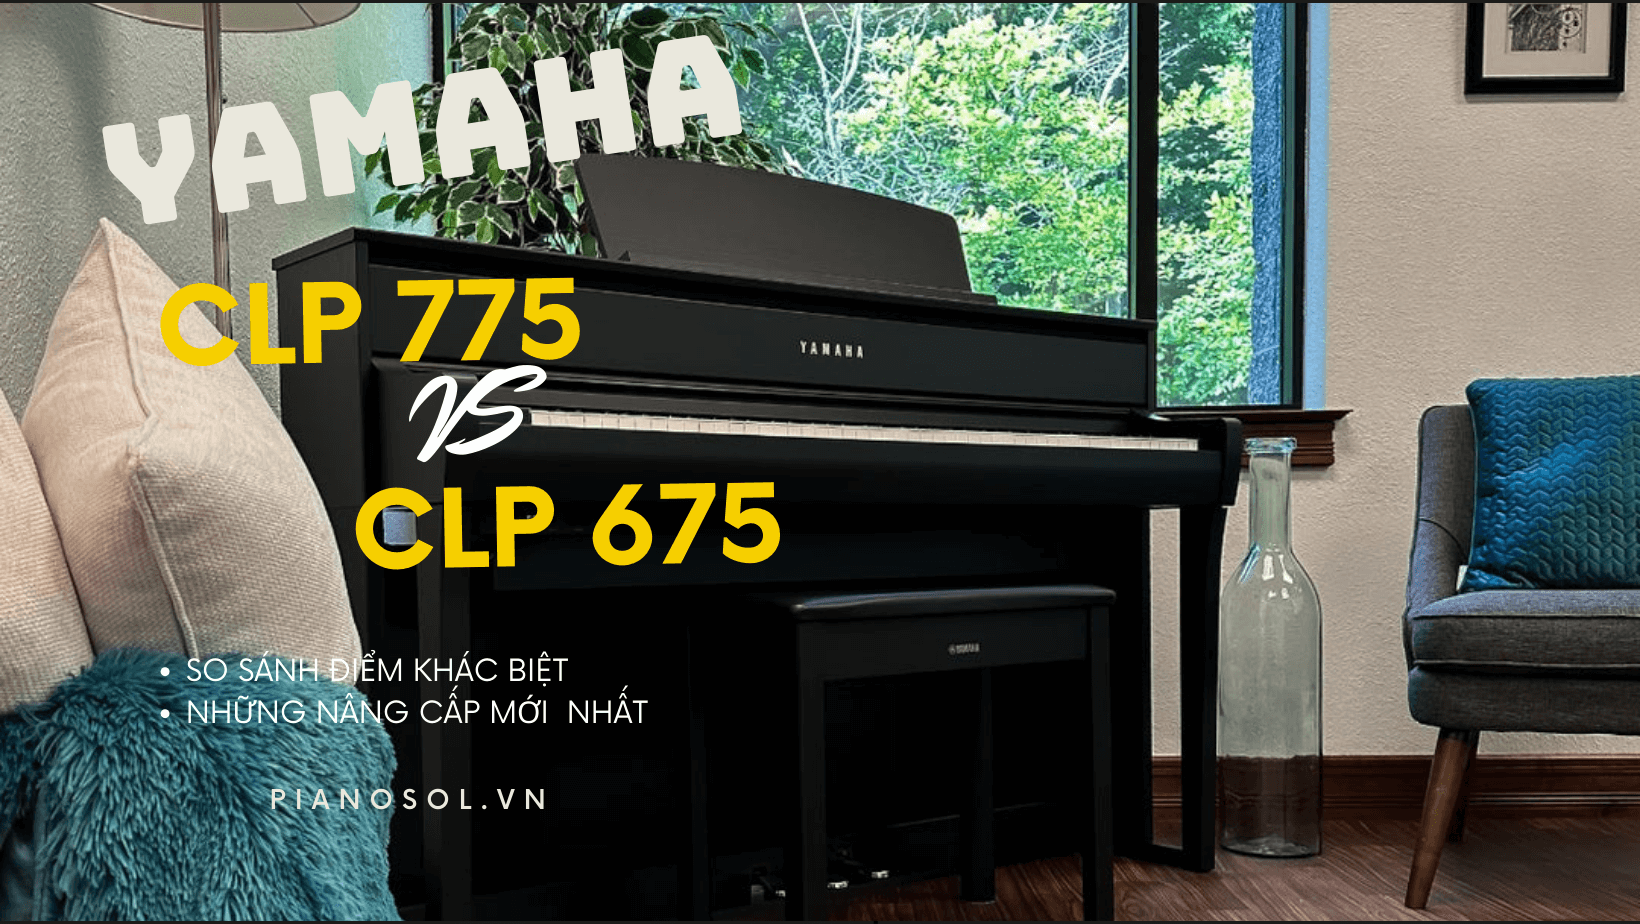 So sánh Piano Yamaha CLP775 và Yamaha CLP675